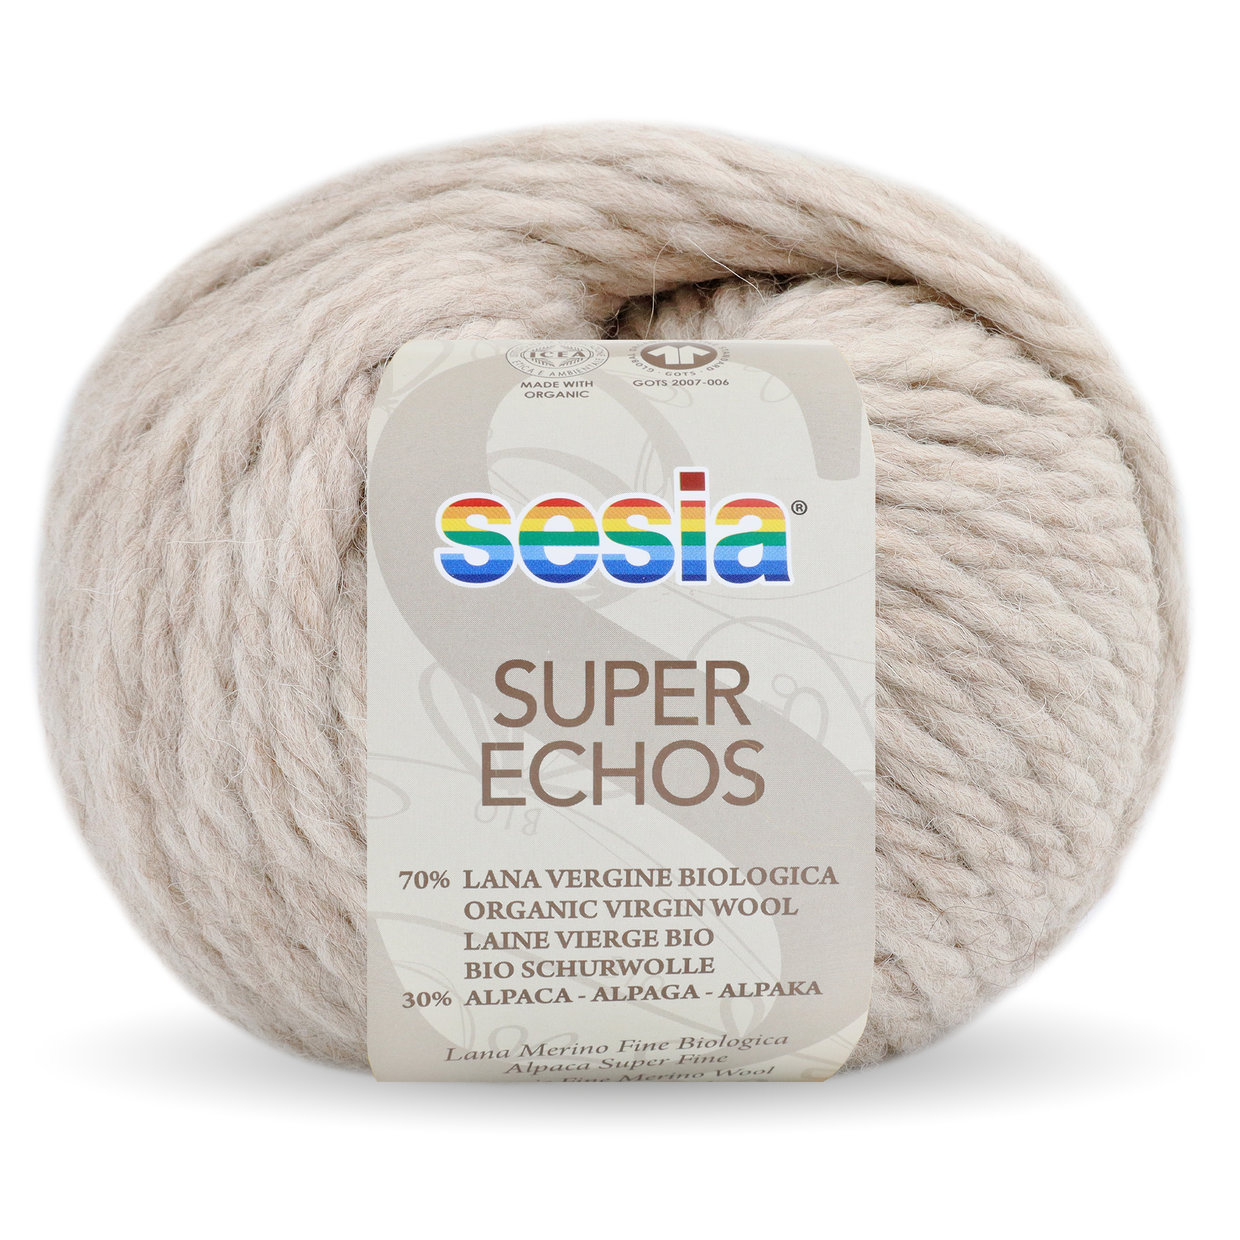 SESIA Super Echos - 1494 corda